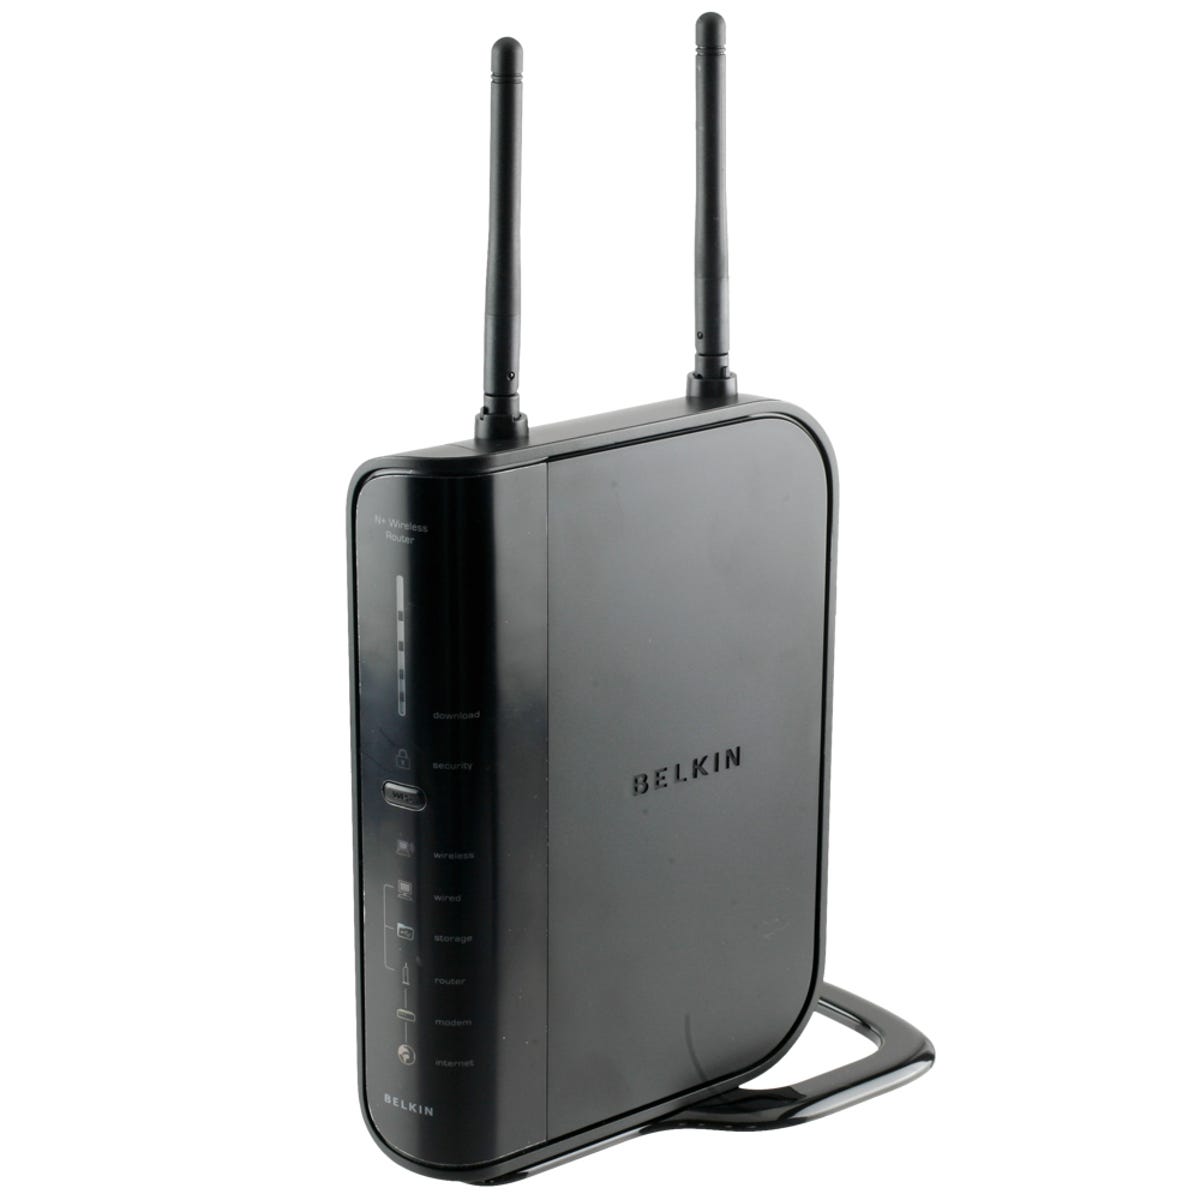 Tage af stivhed Seaport Belkin N+ Wireless Router review: Belkin N+ Wireless Router - CNET